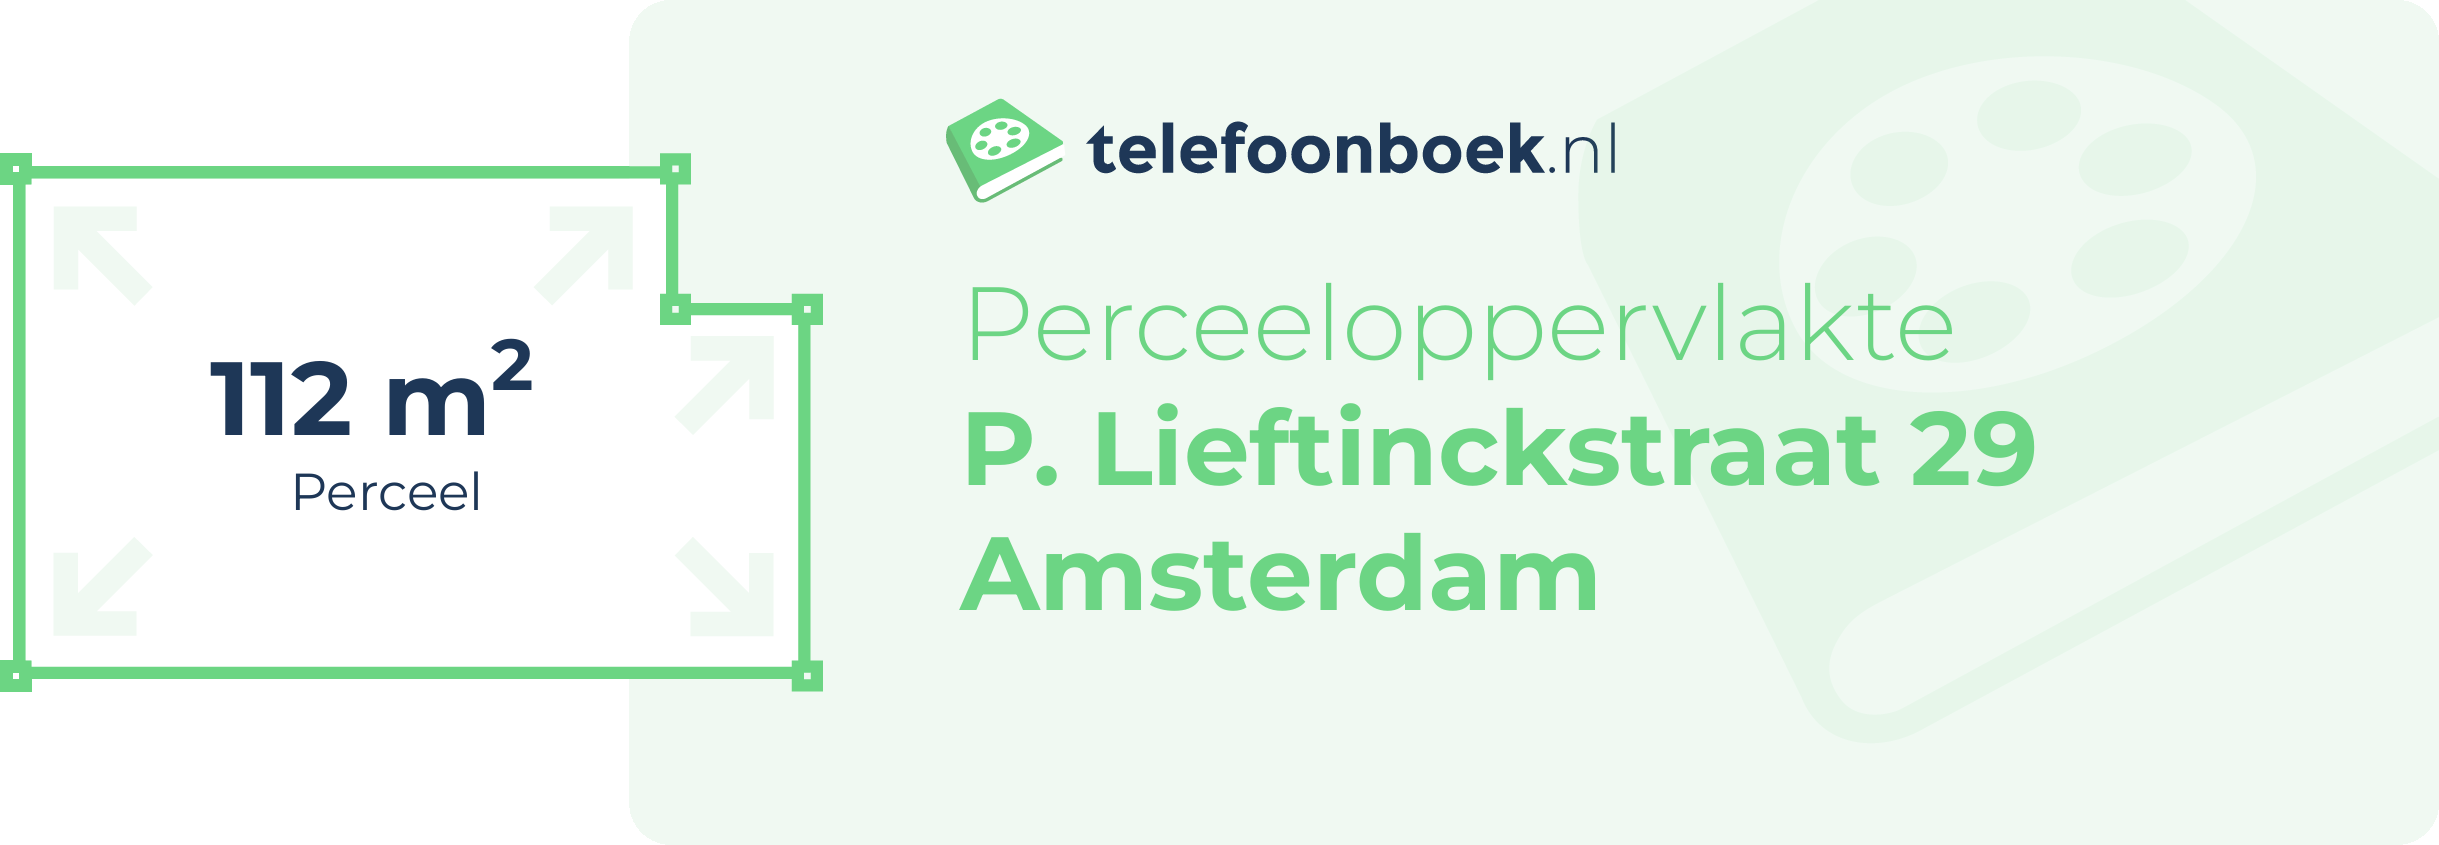 Perceeloppervlakte P. Lieftinckstraat 29 Amsterdam